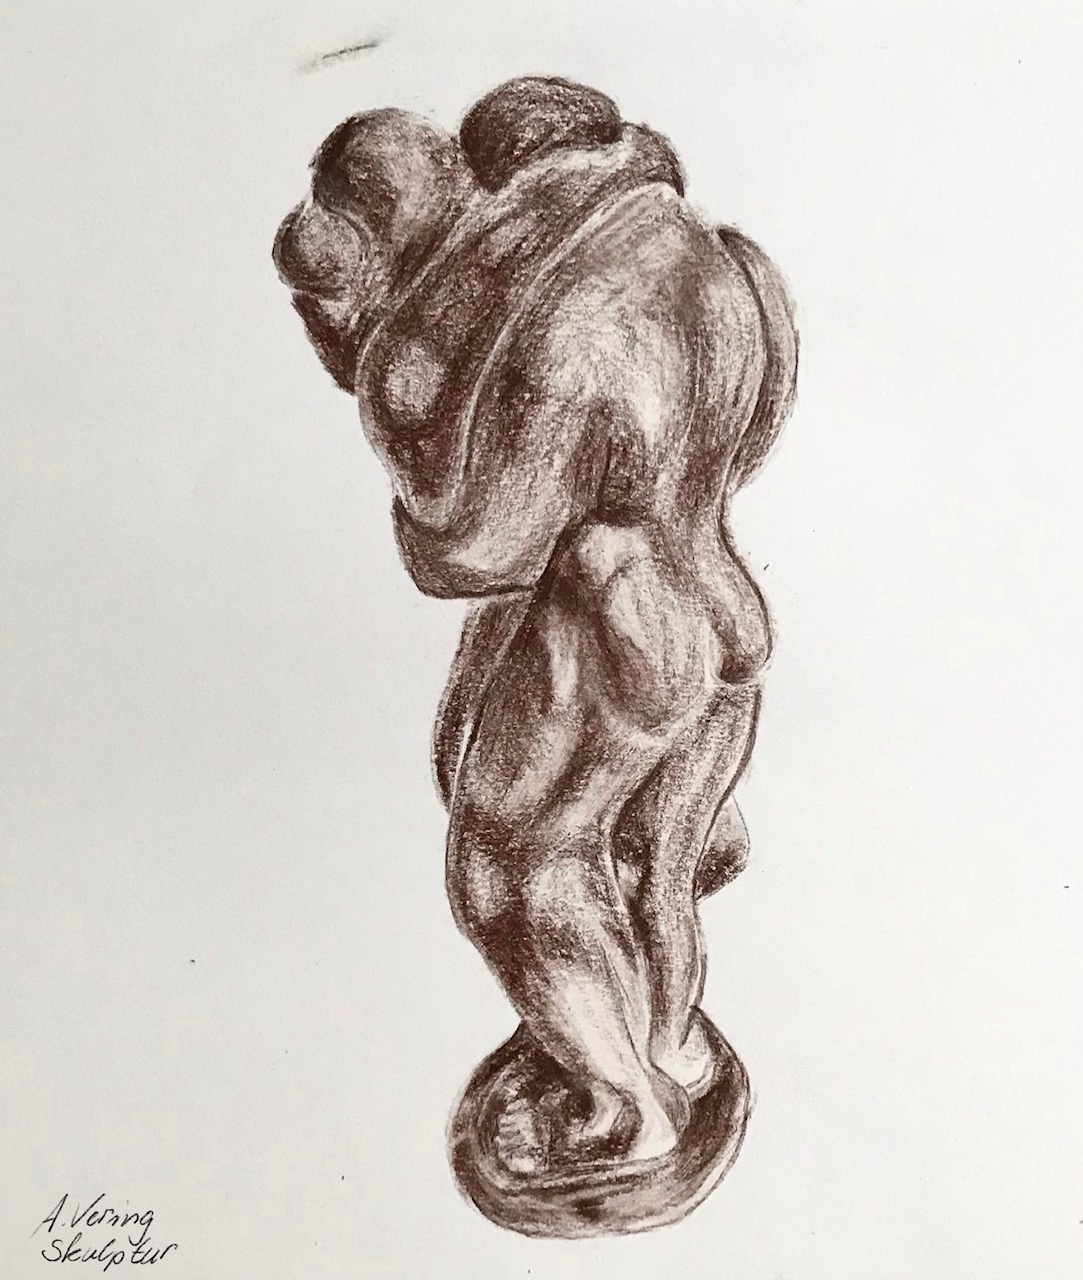 Andrea Vering, Skulptur nach Dimosthenis Sotiroudis, 2021